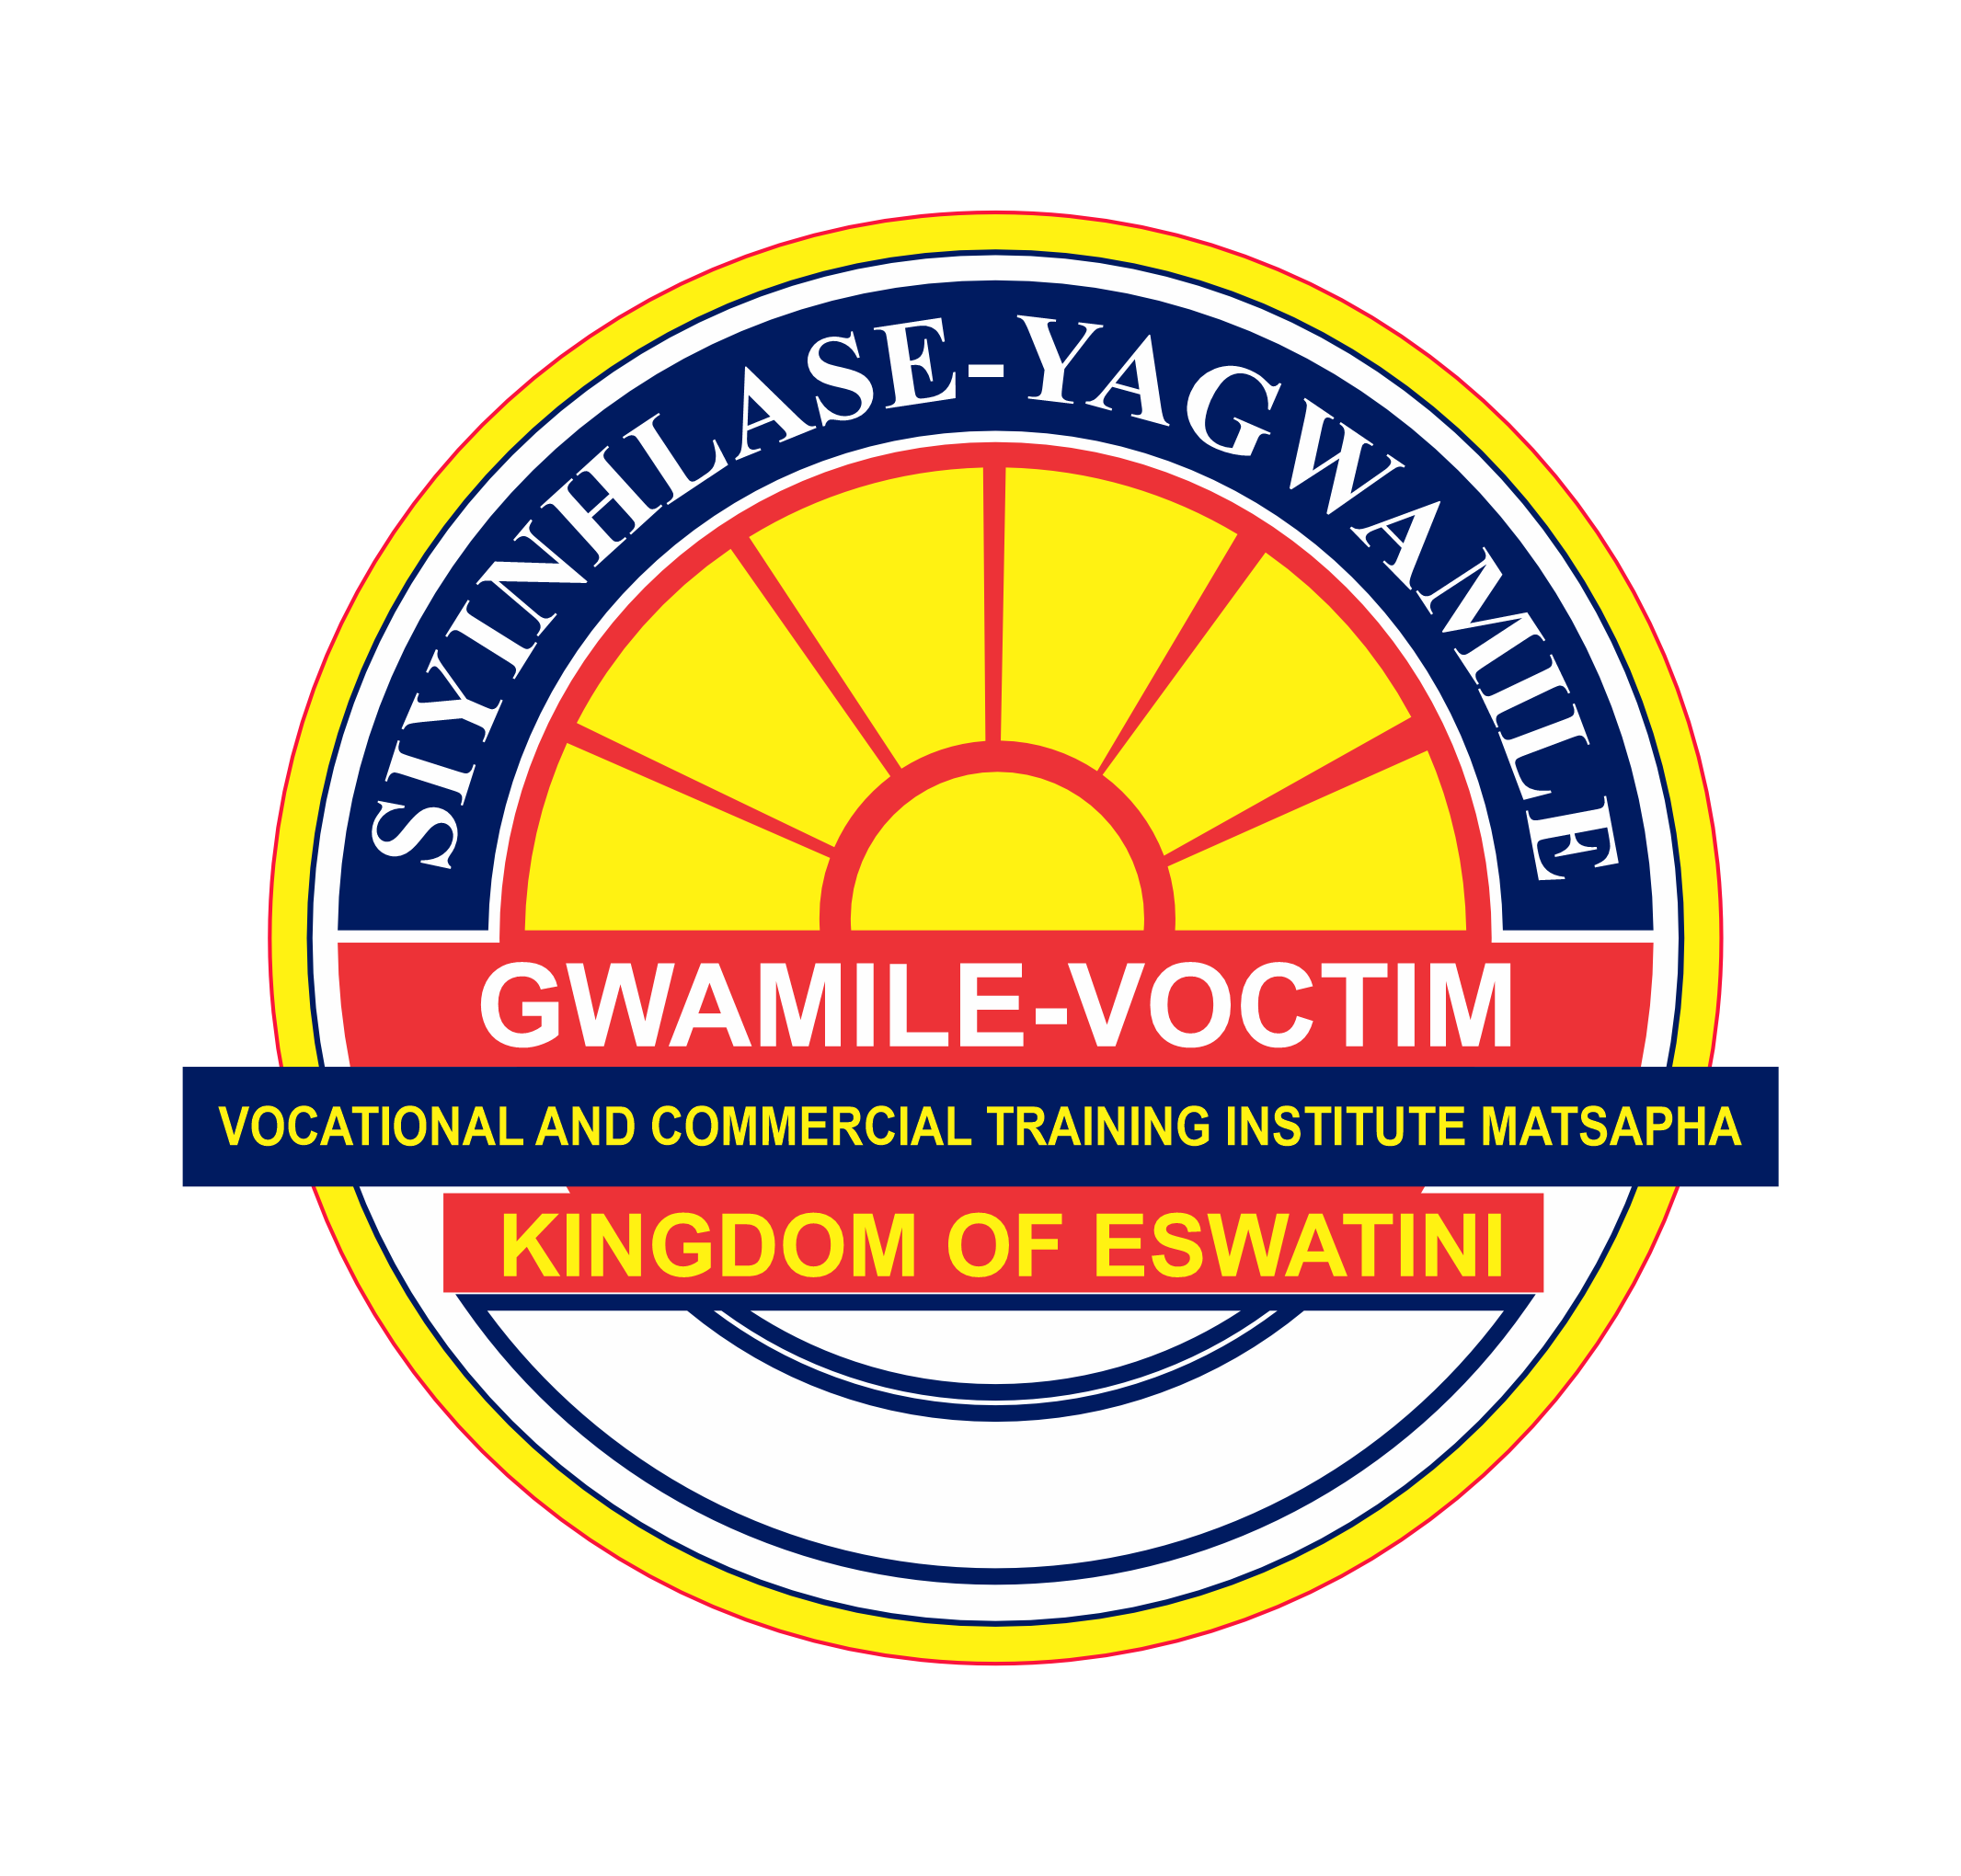 GWAMILE-VOCTIM